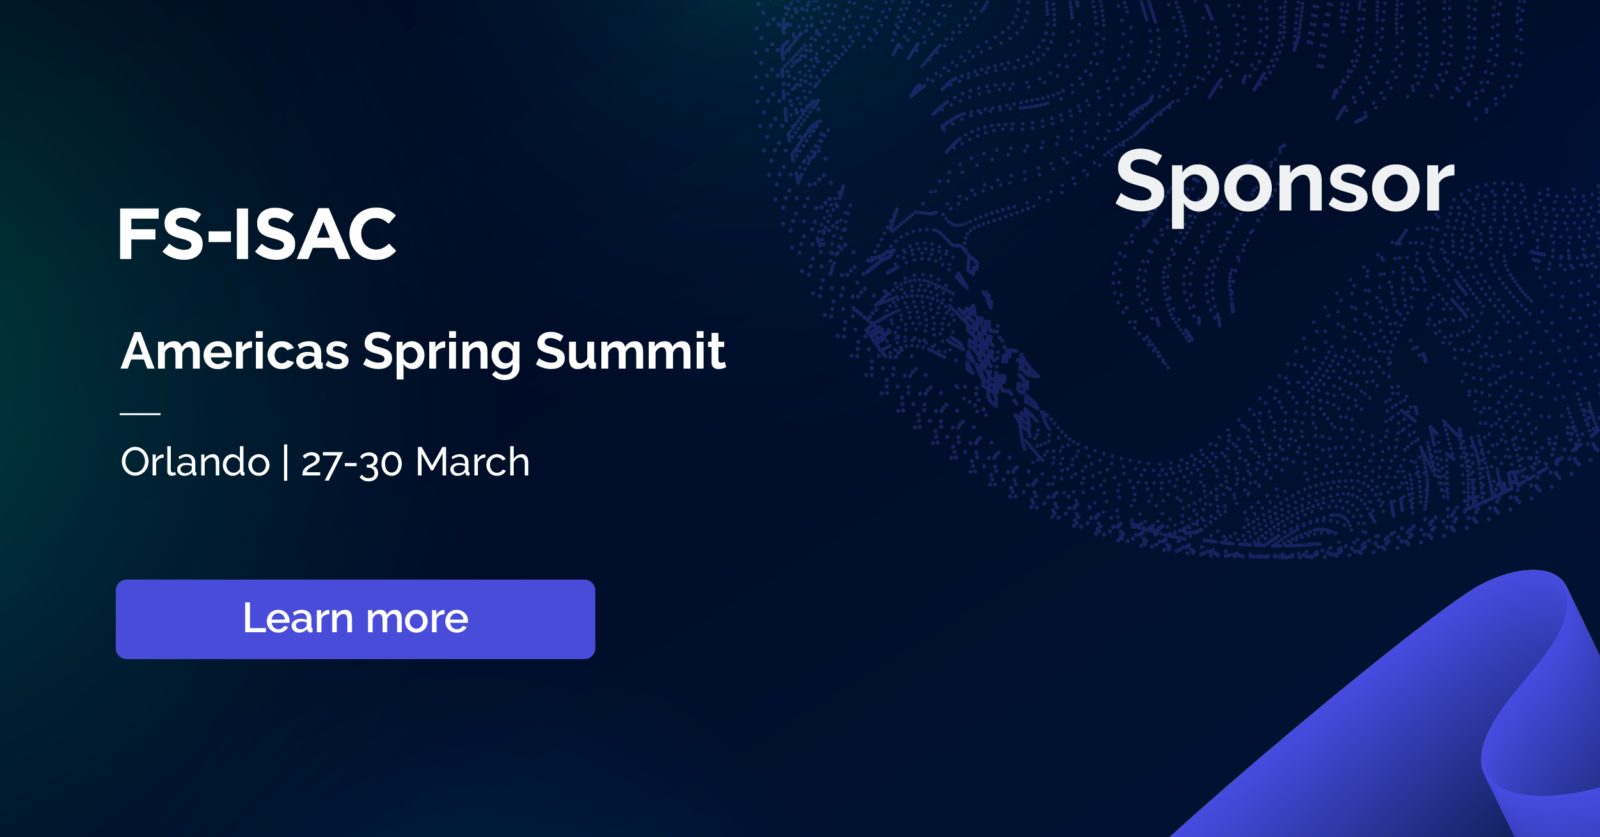 FS-ISAC Americas Spring Summit Sponsor